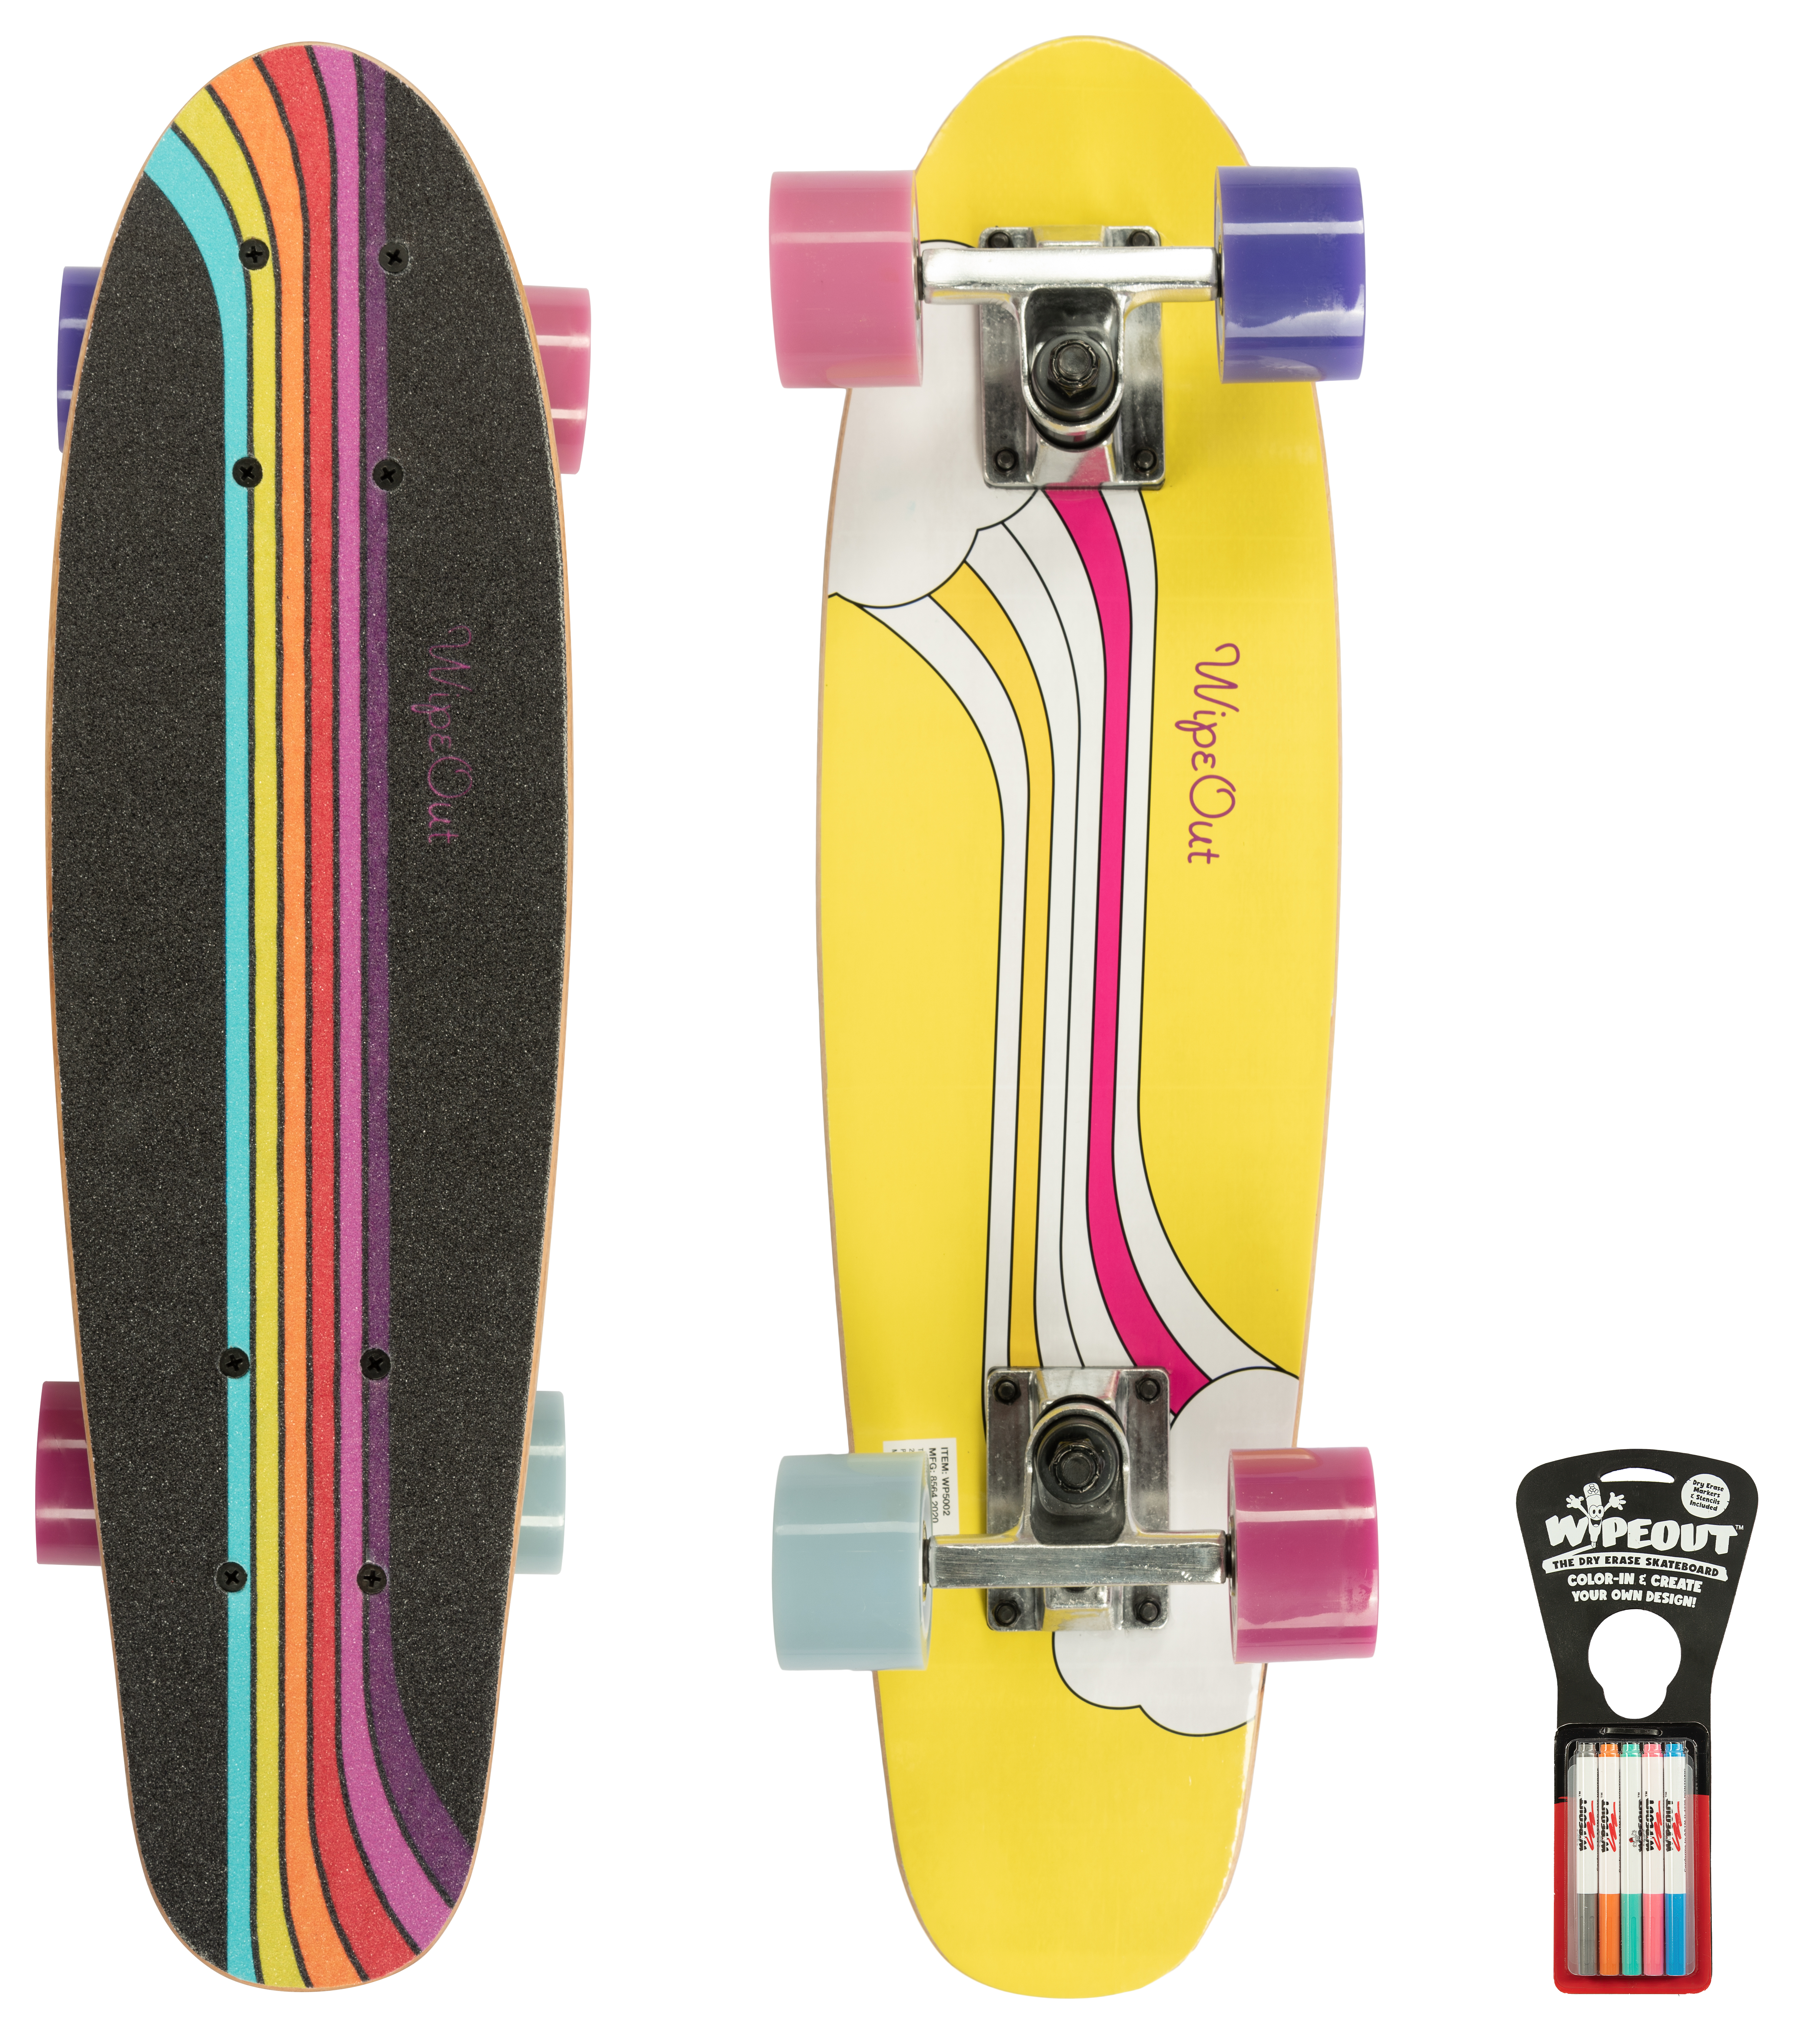 Характеристики скейты для детей Wipeout Skateboard Rainbow